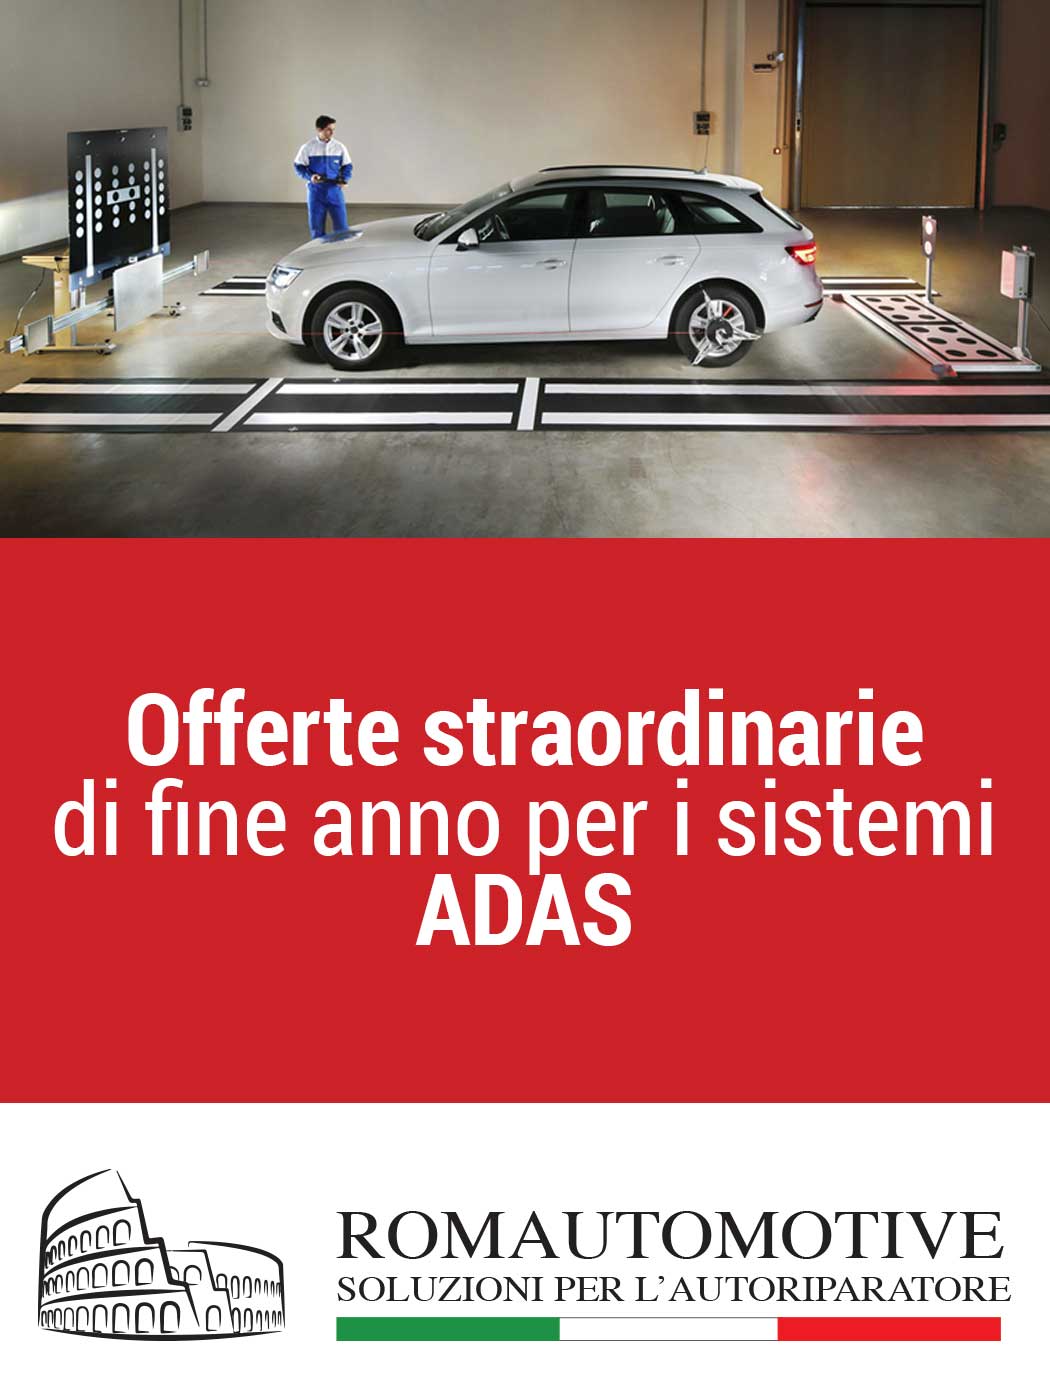 Foto 1 - Sistemi ADAS – Romautomotive al passo coi tempi